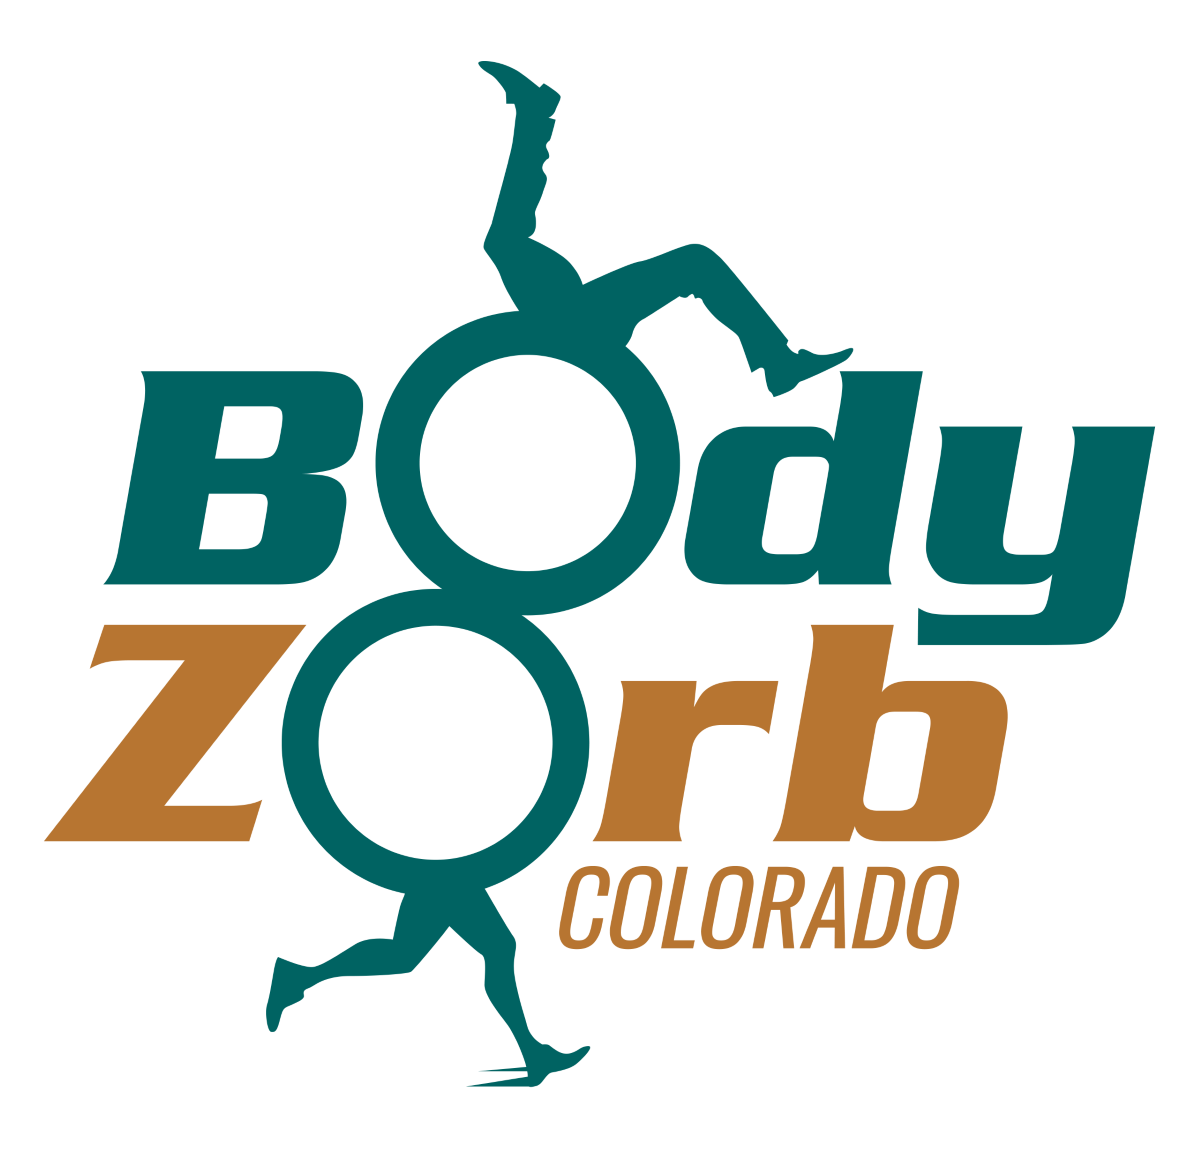 Knocker Ball competitor Body Zorb Colorado renting to Colorado area